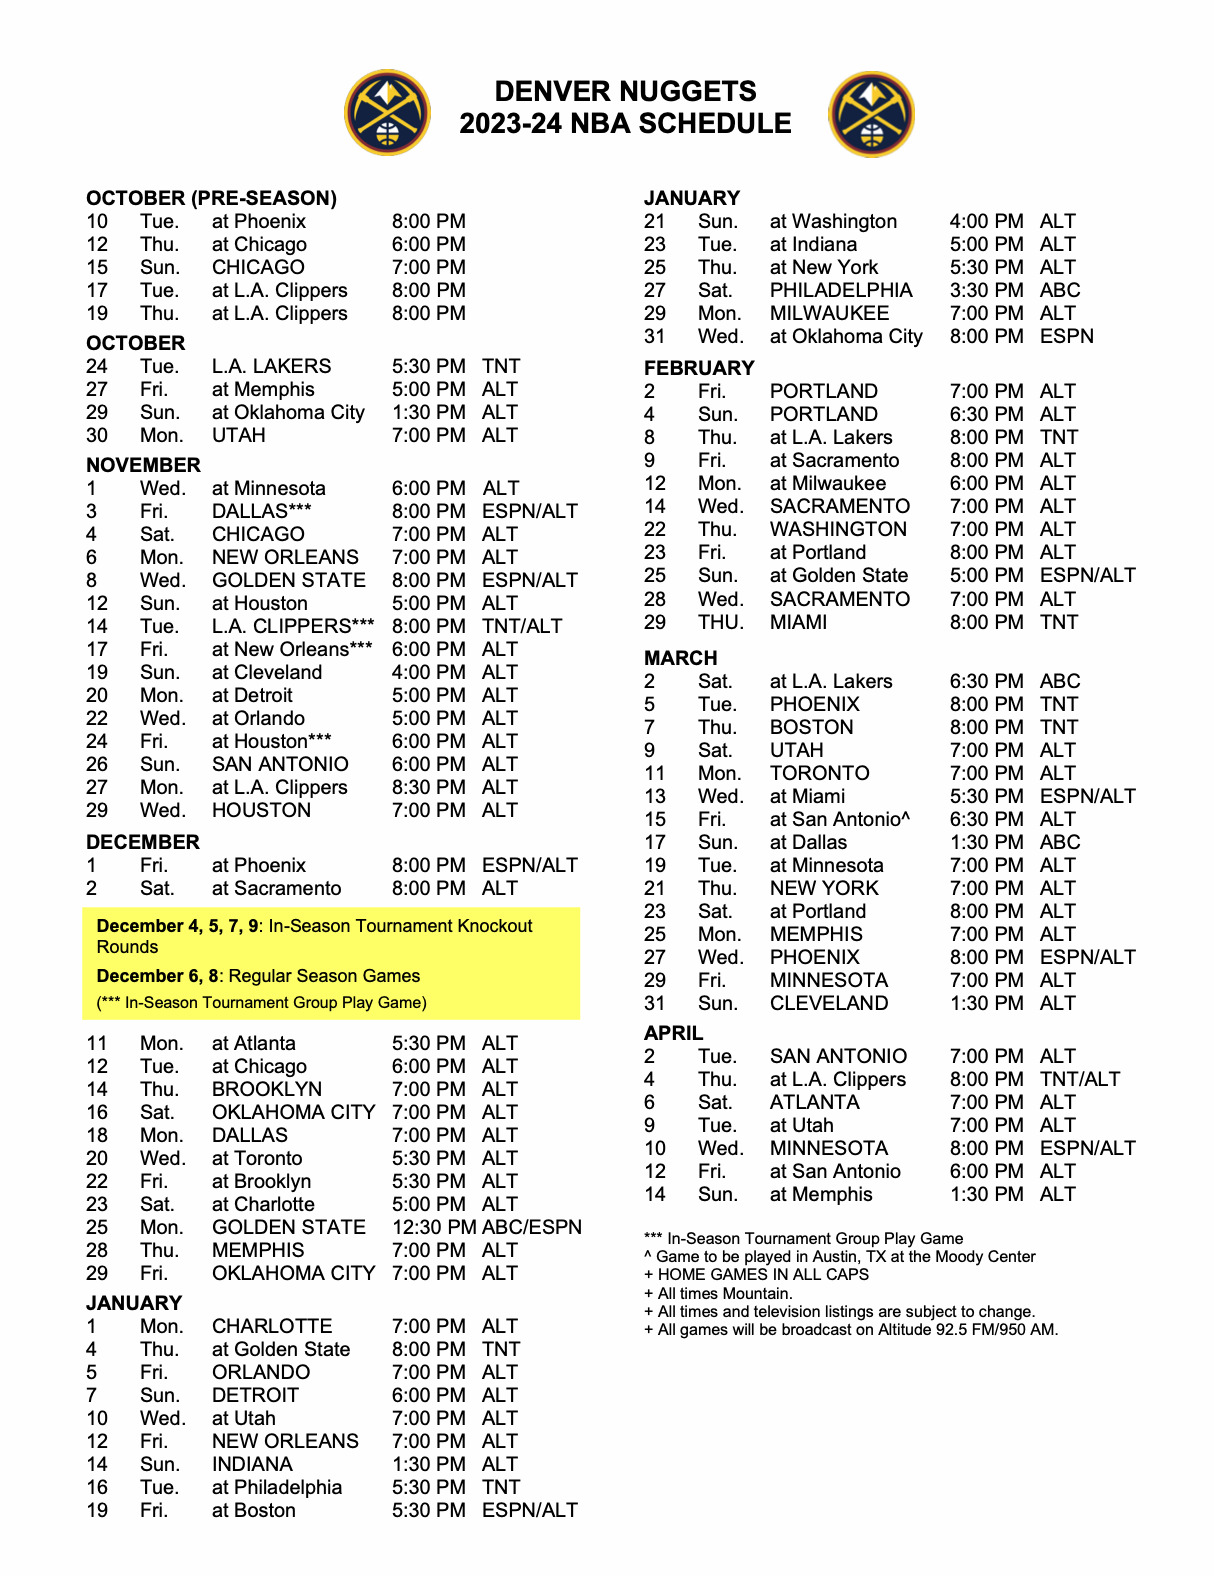 Denver Nuggets 2023-24 official regular season schedule released - Mile High Sports